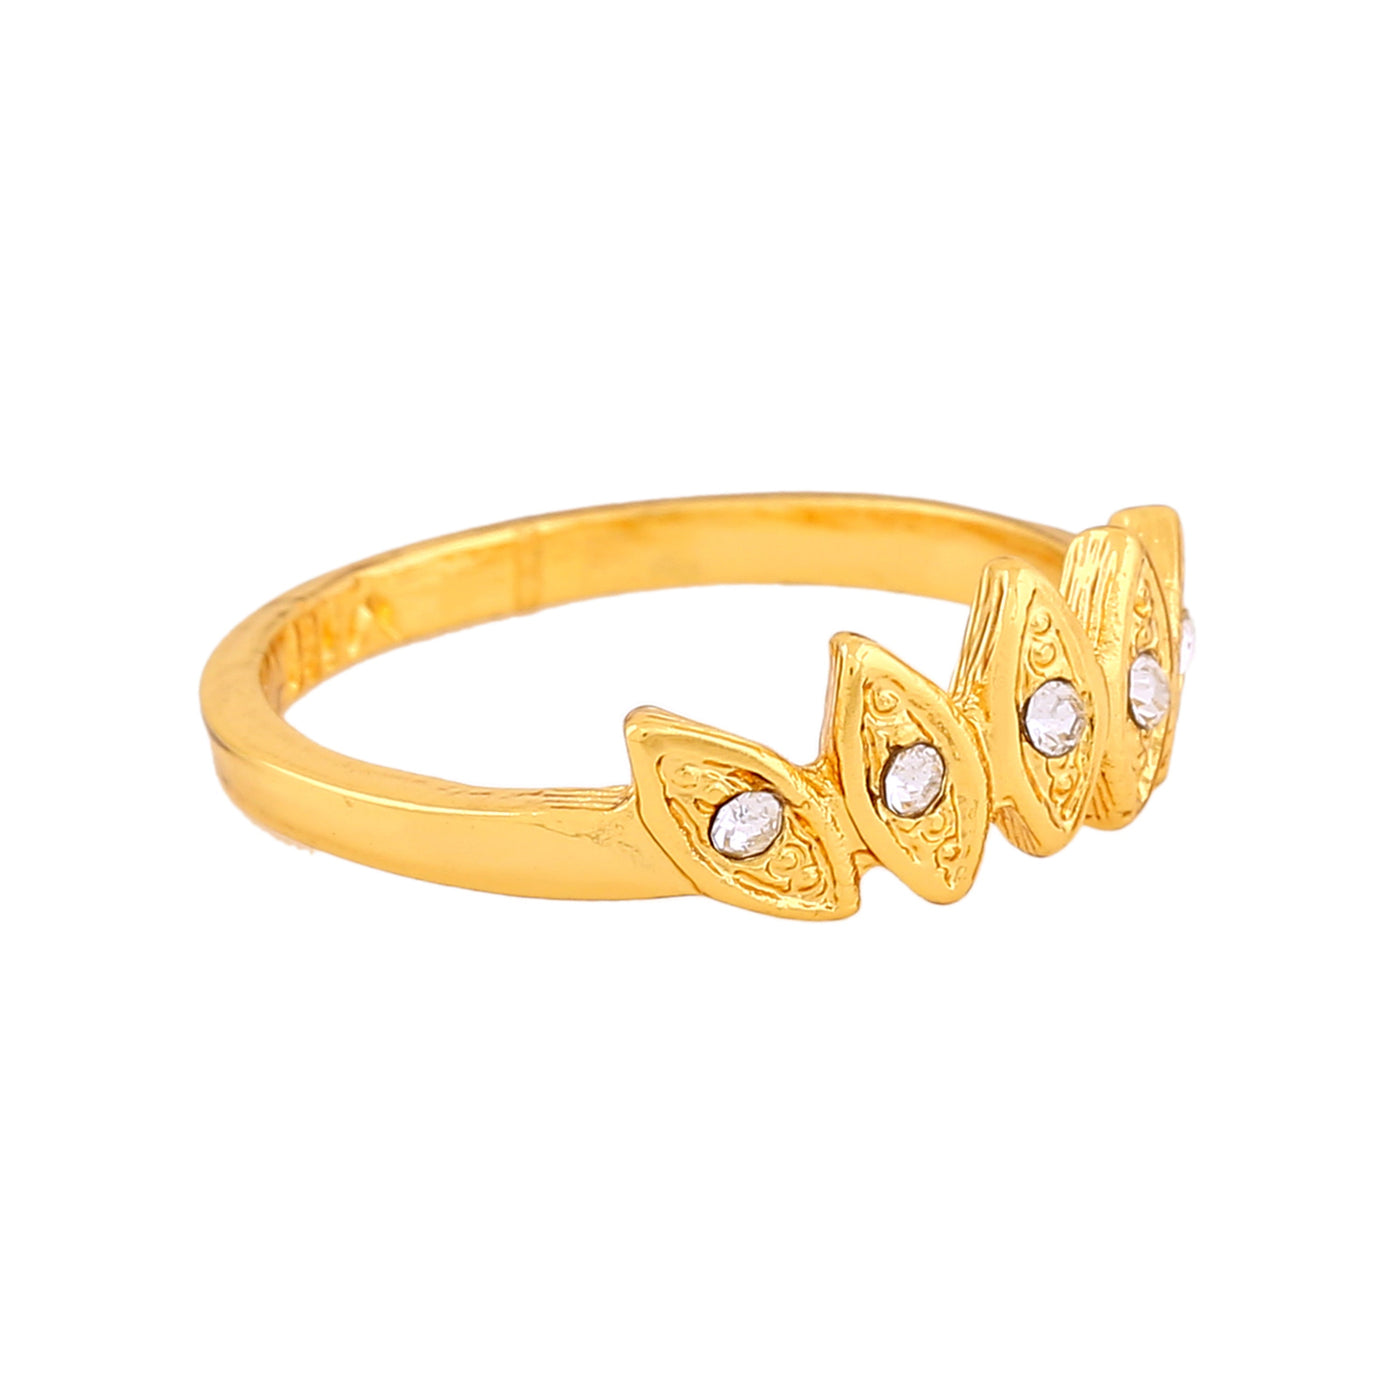 Estele Gold Plated Spike Designer Finger Ring with Crystals for Women